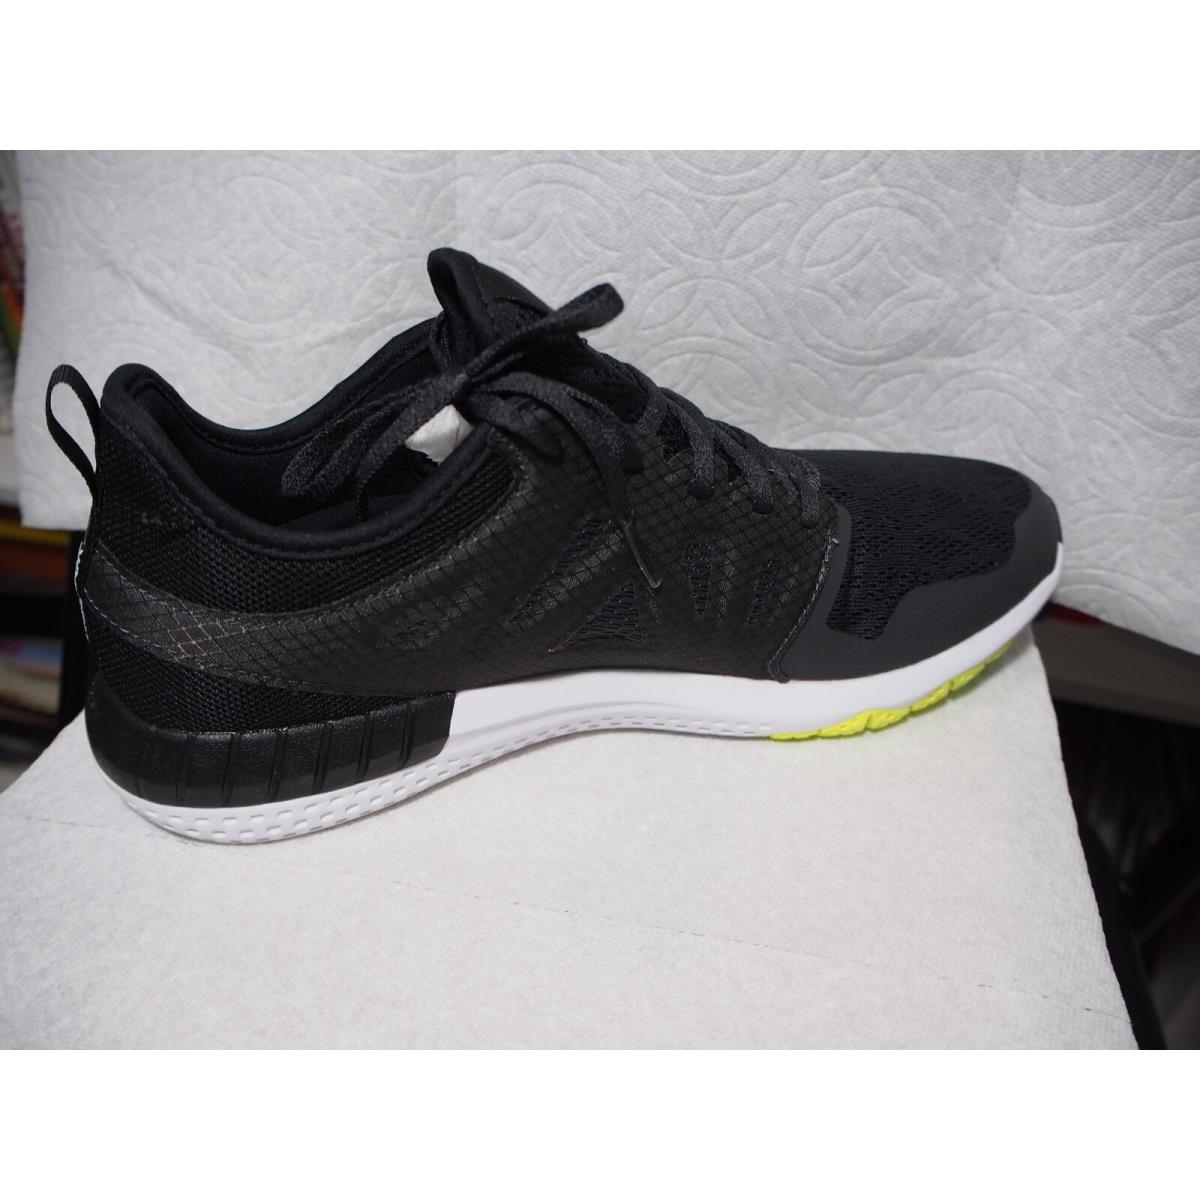 Reebok shoes Zprint - Black , Coal/Black/Alloy/Solar Yellow/Silver Metallic Manufacturer 2